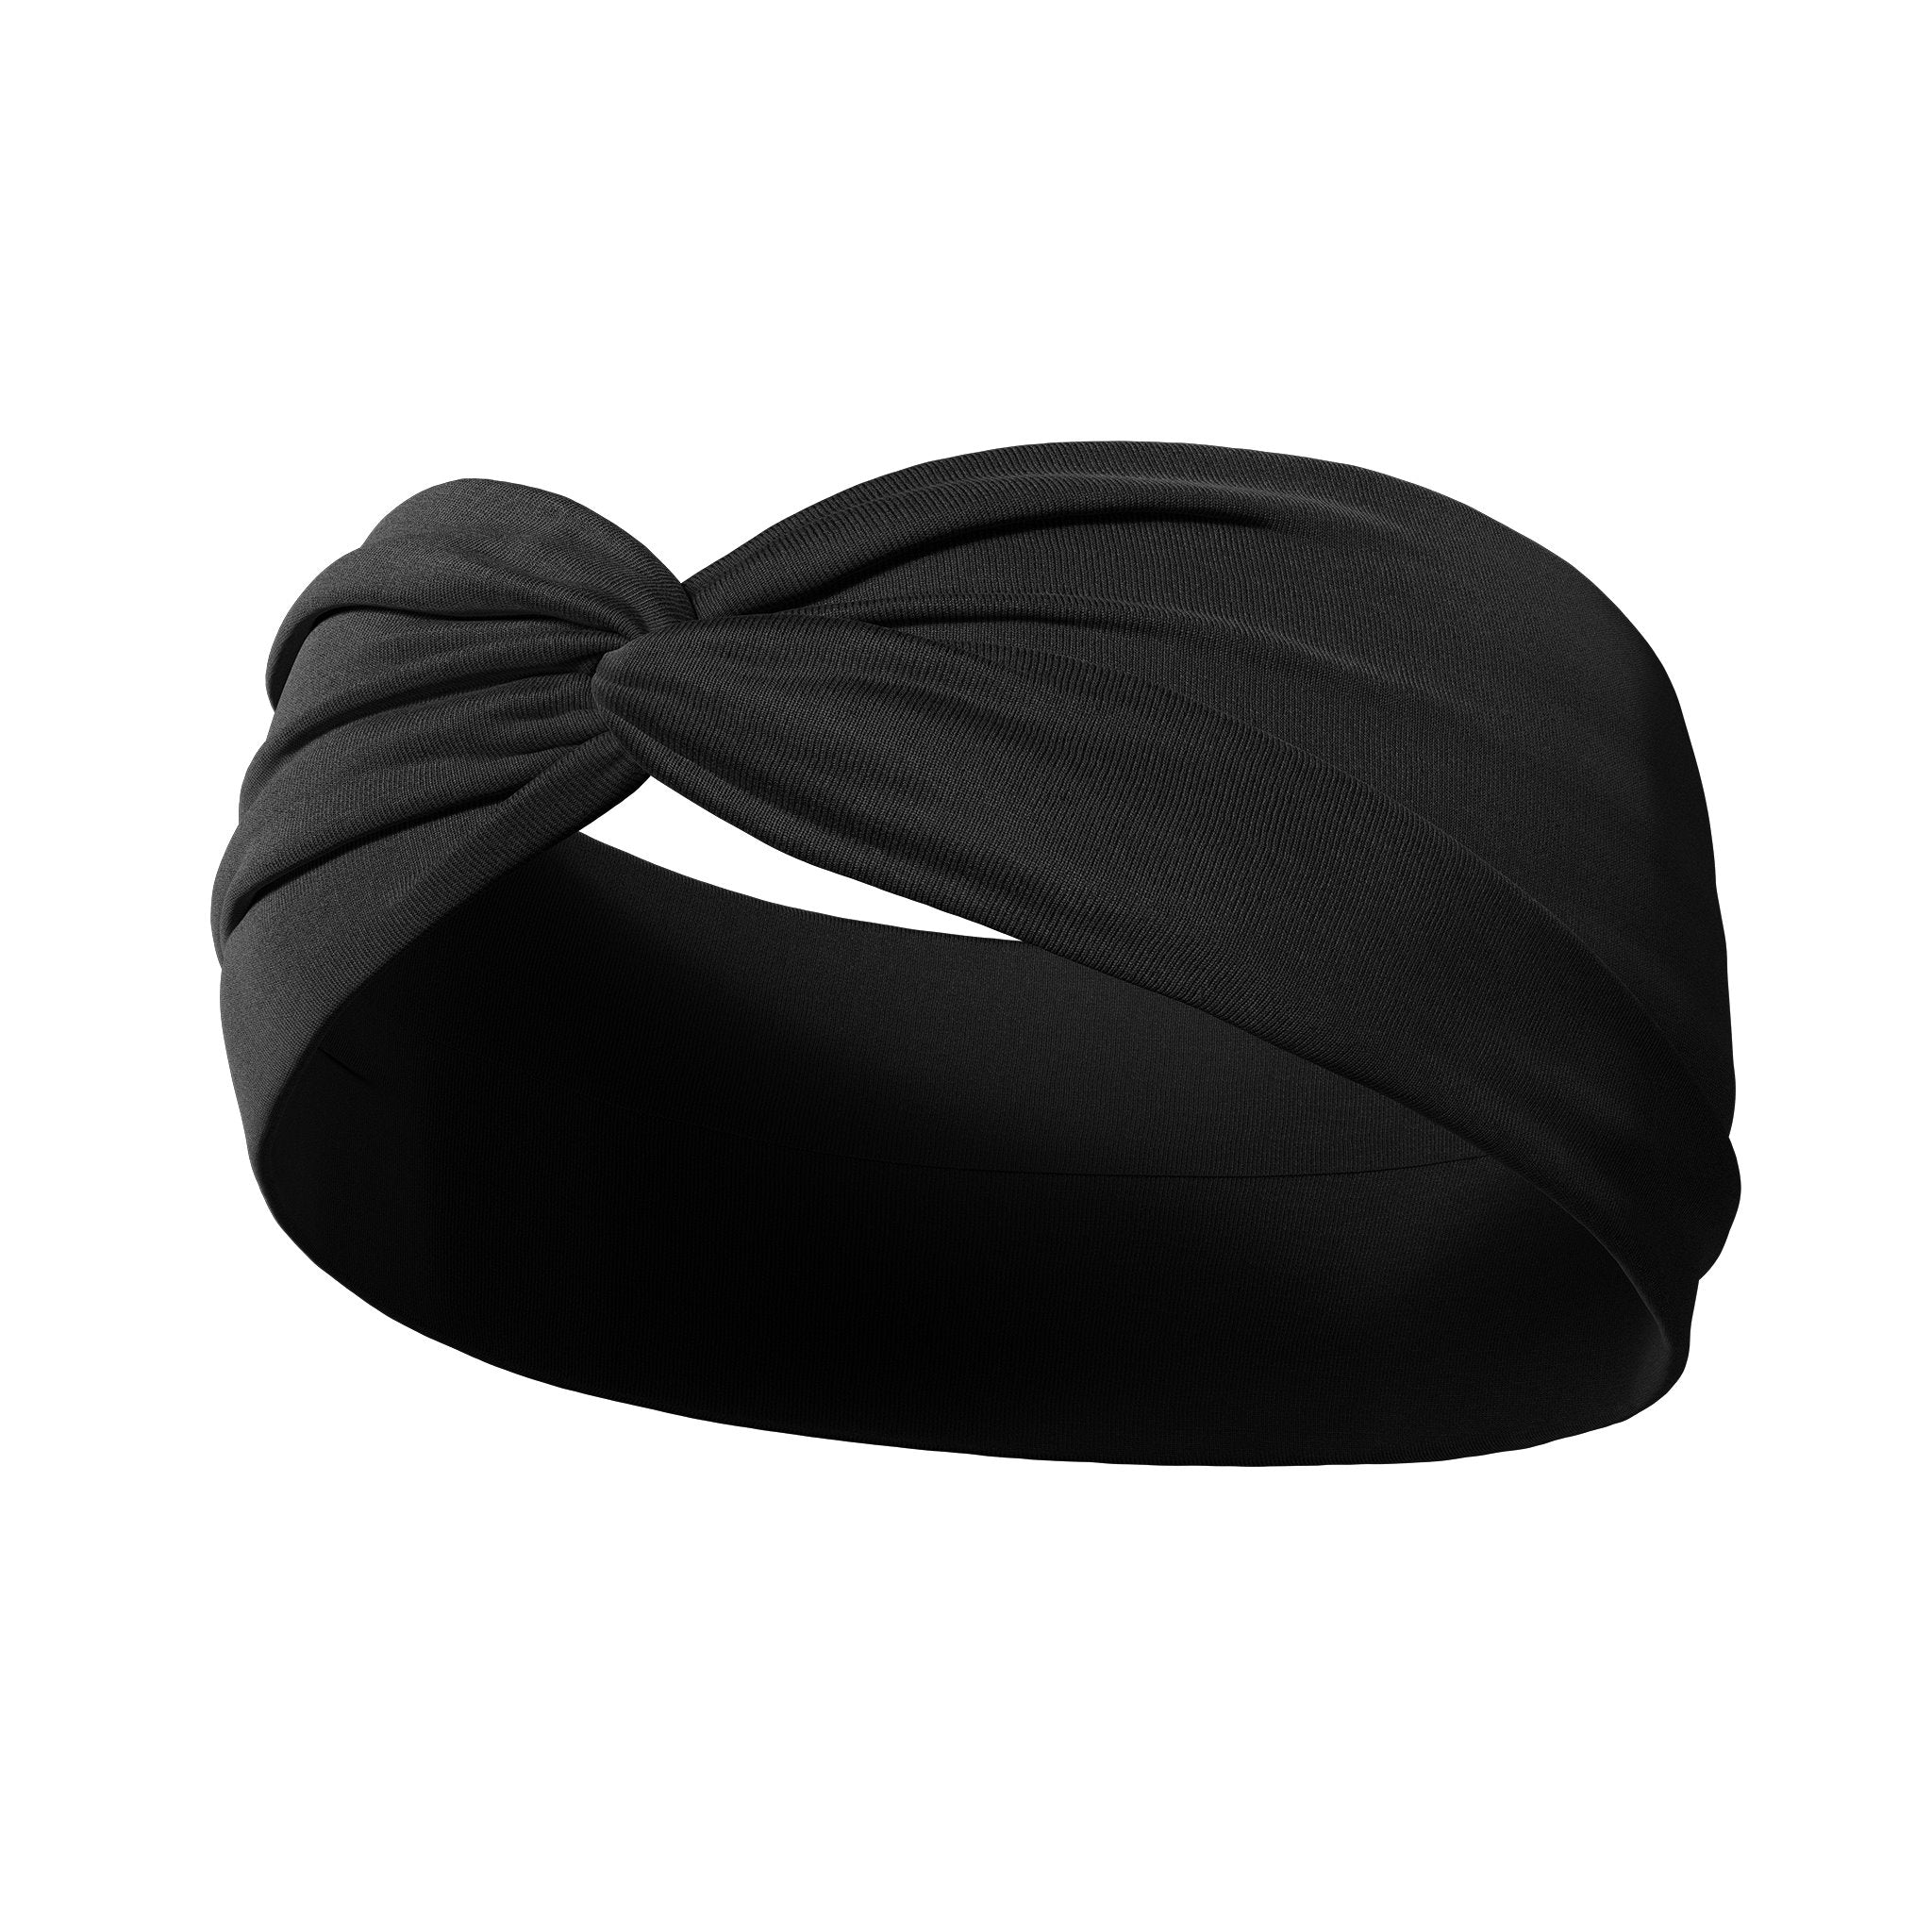 Adult women's solid black headband